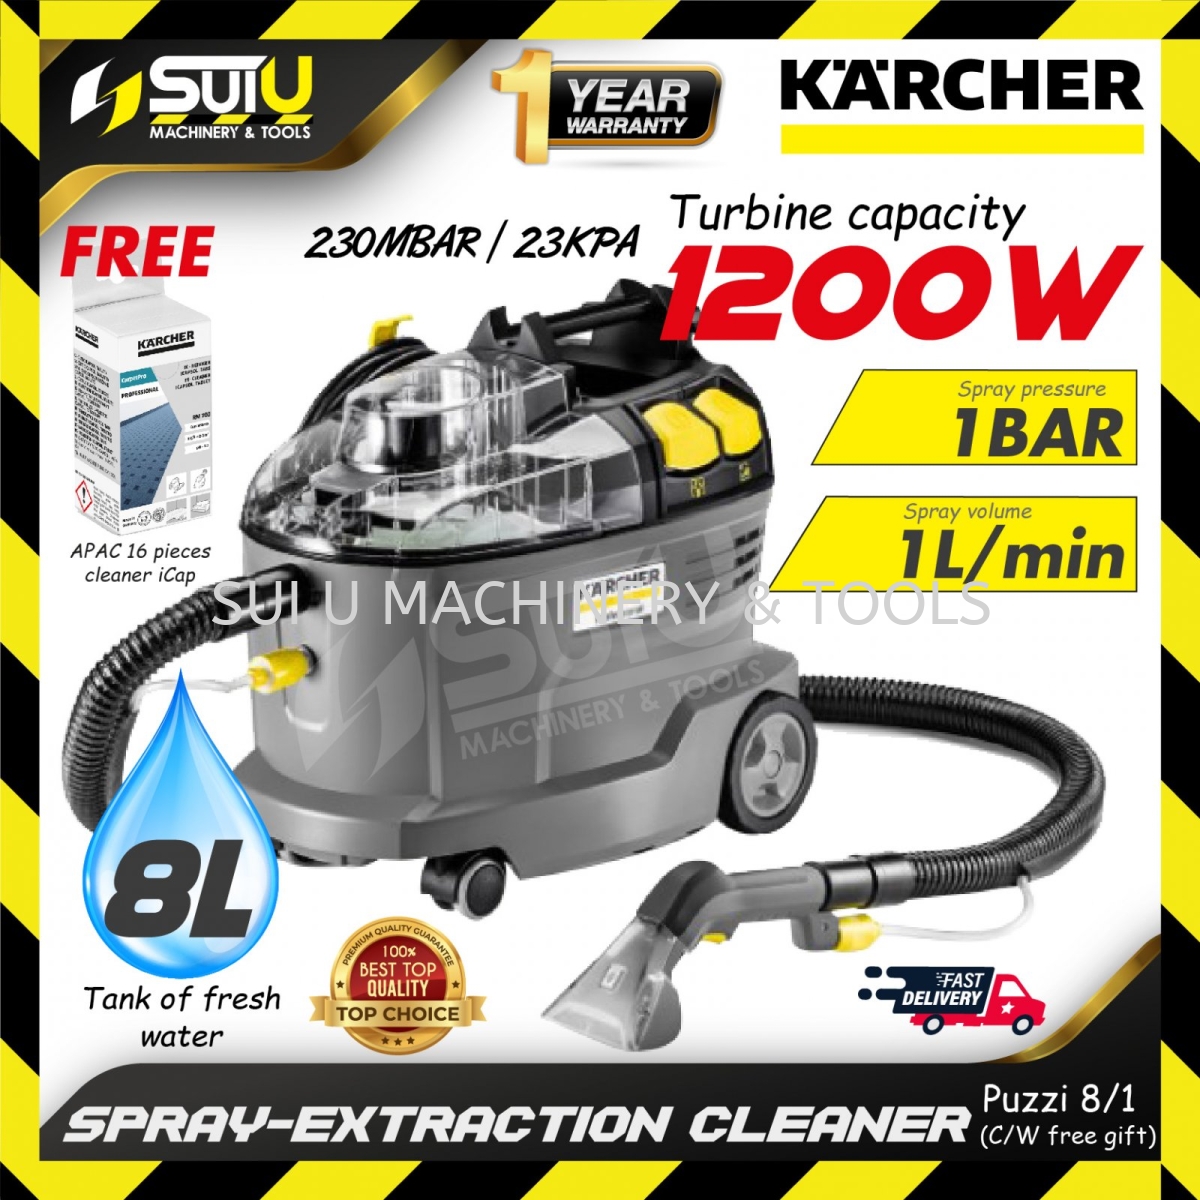 Karcher Puzzi 8/1 C Carpet Extractor